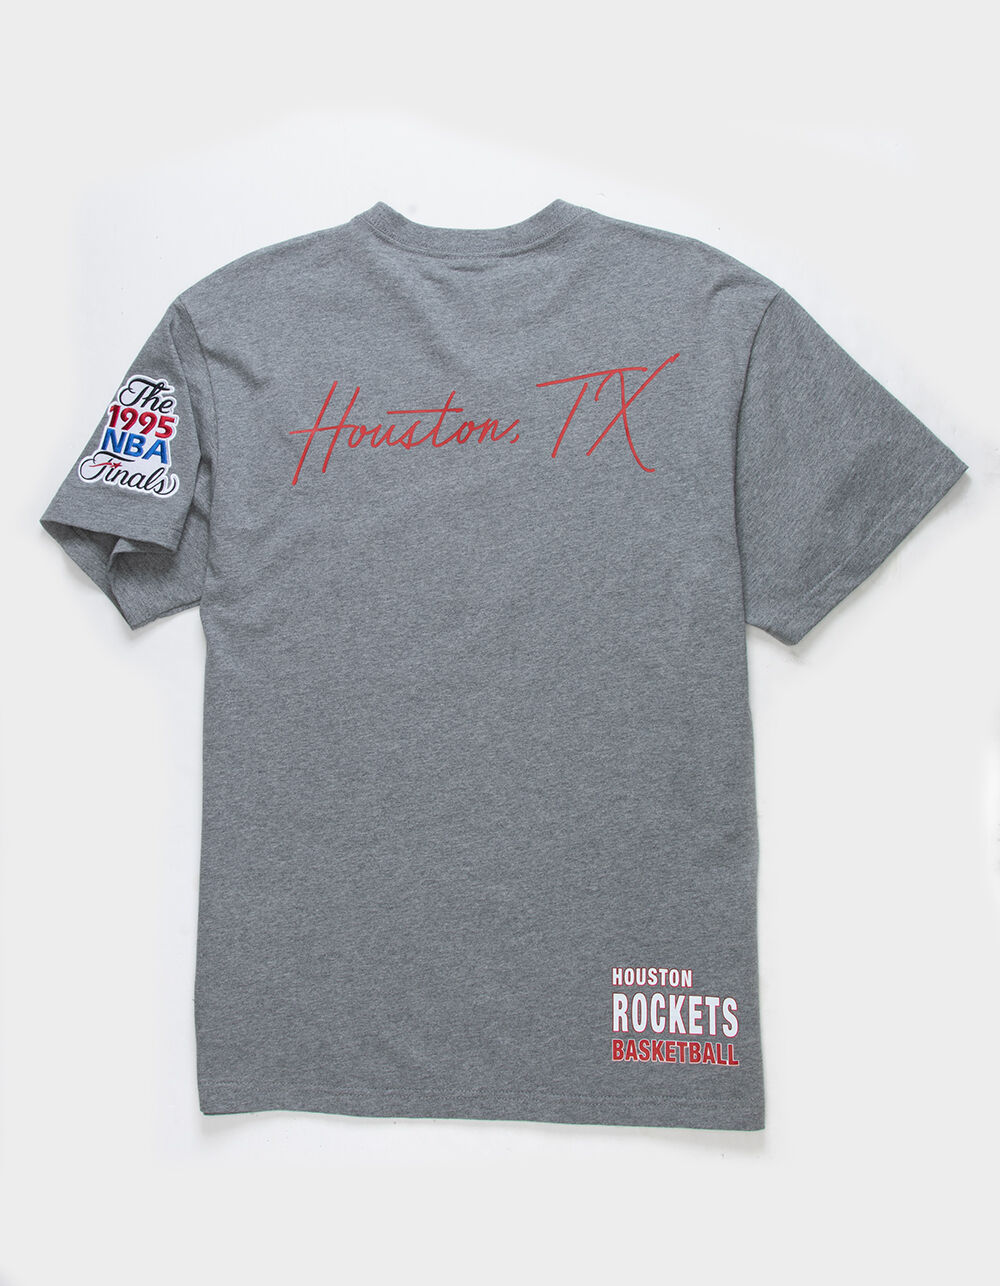 Nike Logo Houston Rockets Shirt - High-Quality Printed Brand